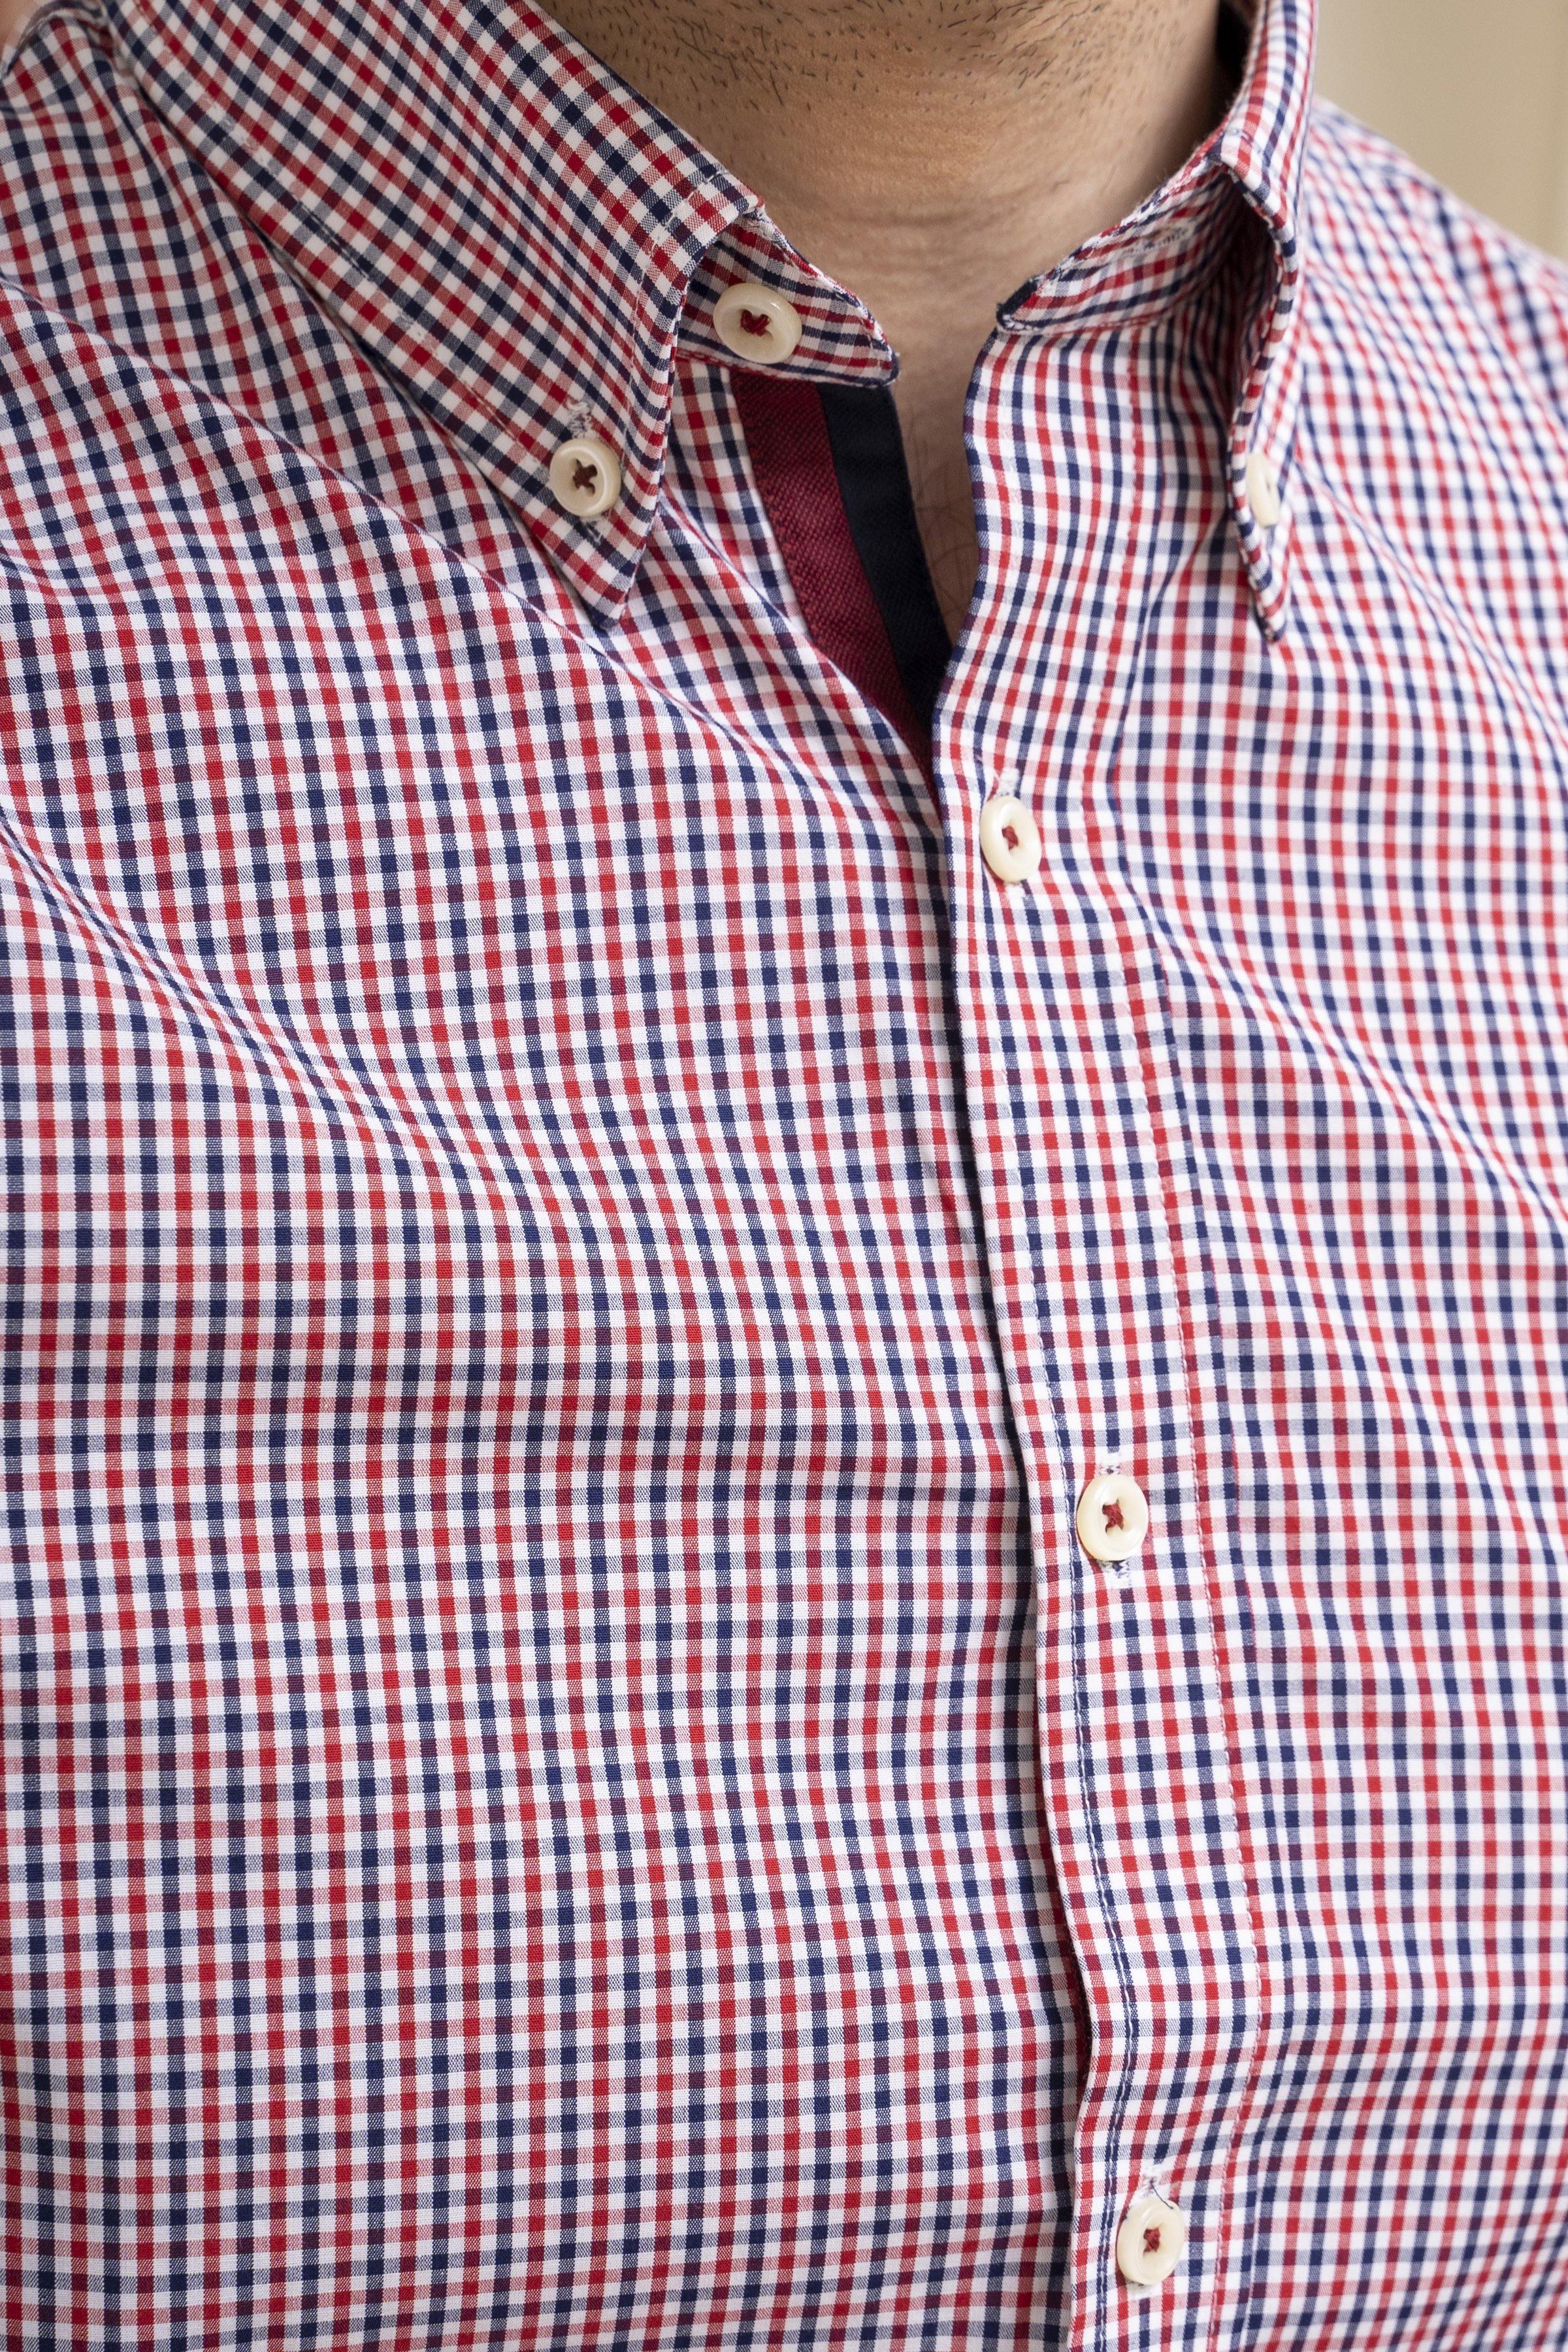 SEMI FORMAL SHIRT RED WHITE CHECK at Charcoal Clothing